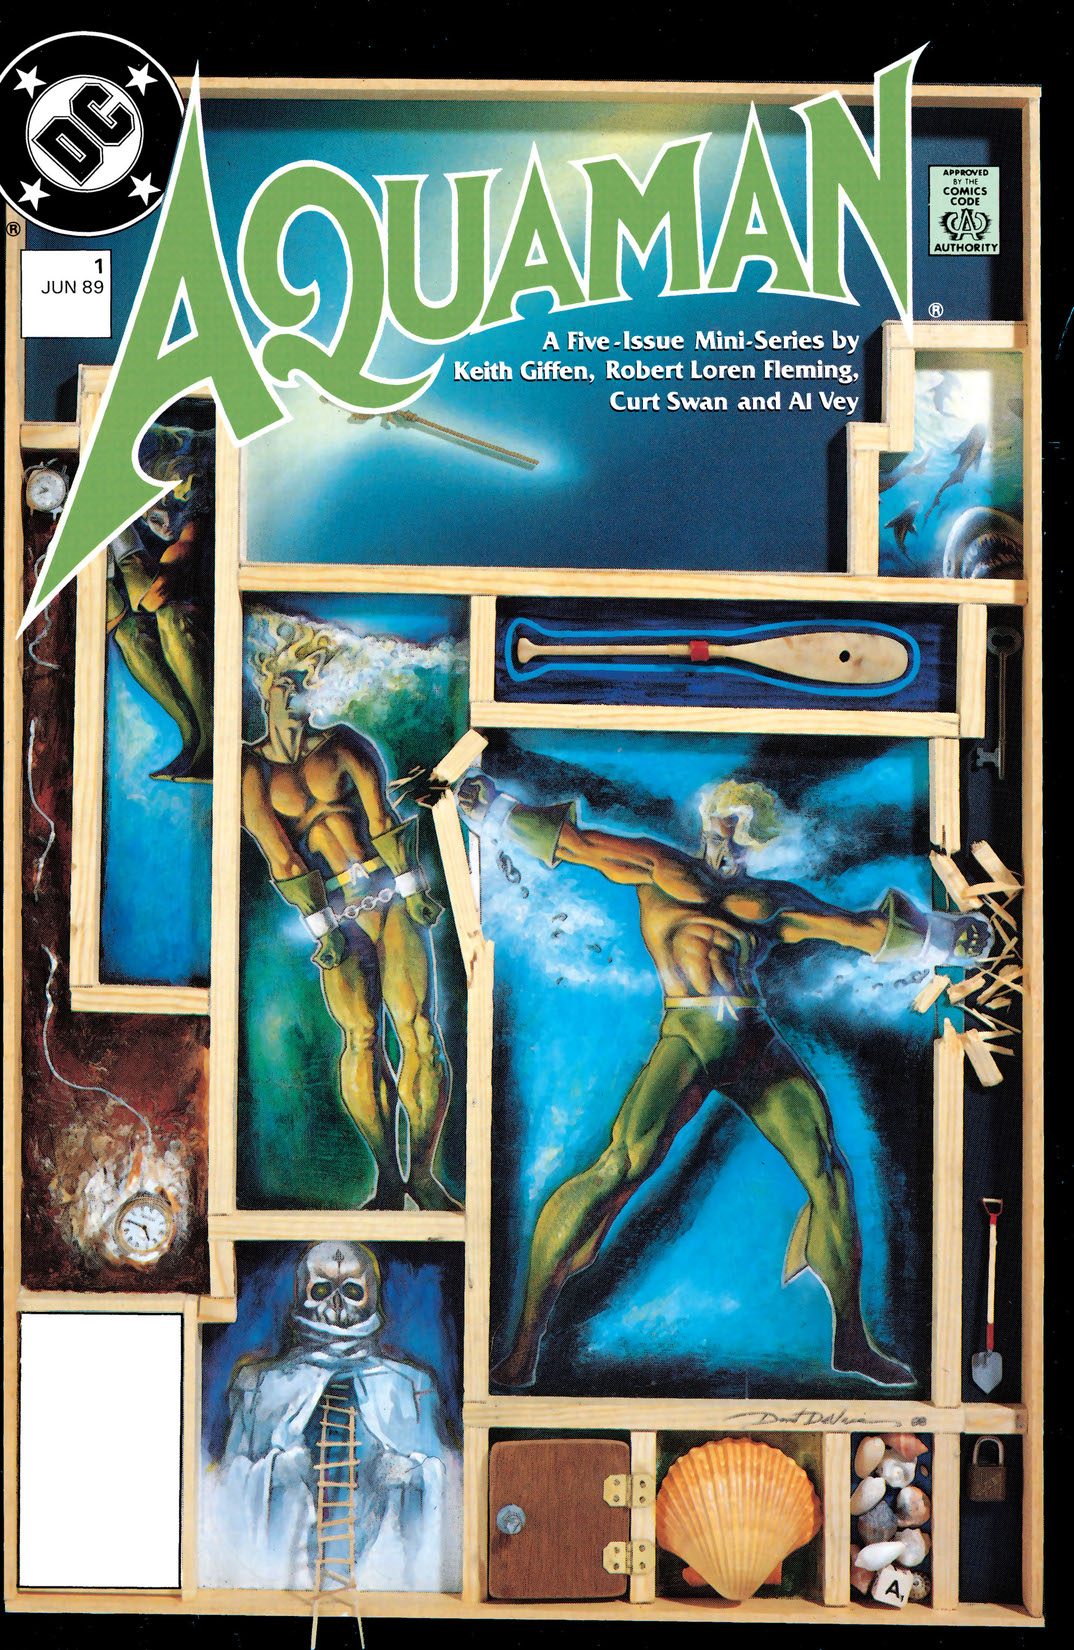 Aquaman (1989-1989) #1 preview images